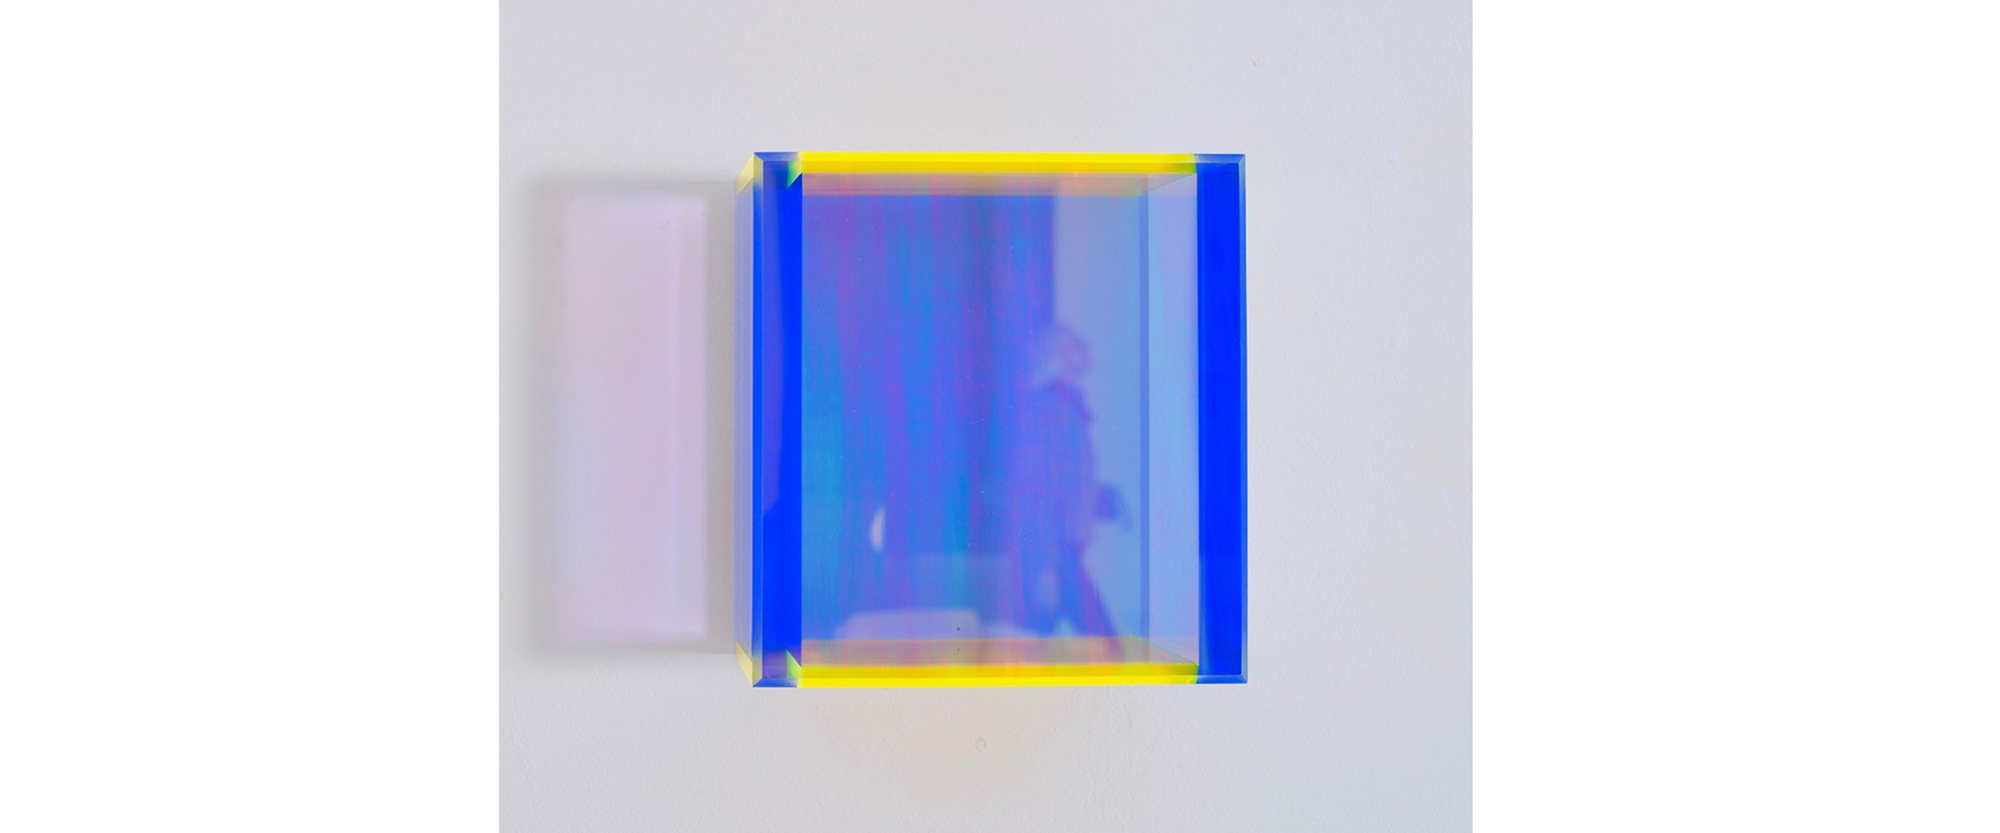 color mirror rainbow pastel blue hongkong - 2020, Acrylglas, fluoreszierend, Edition von 6, 21 x 20 x 11 cm